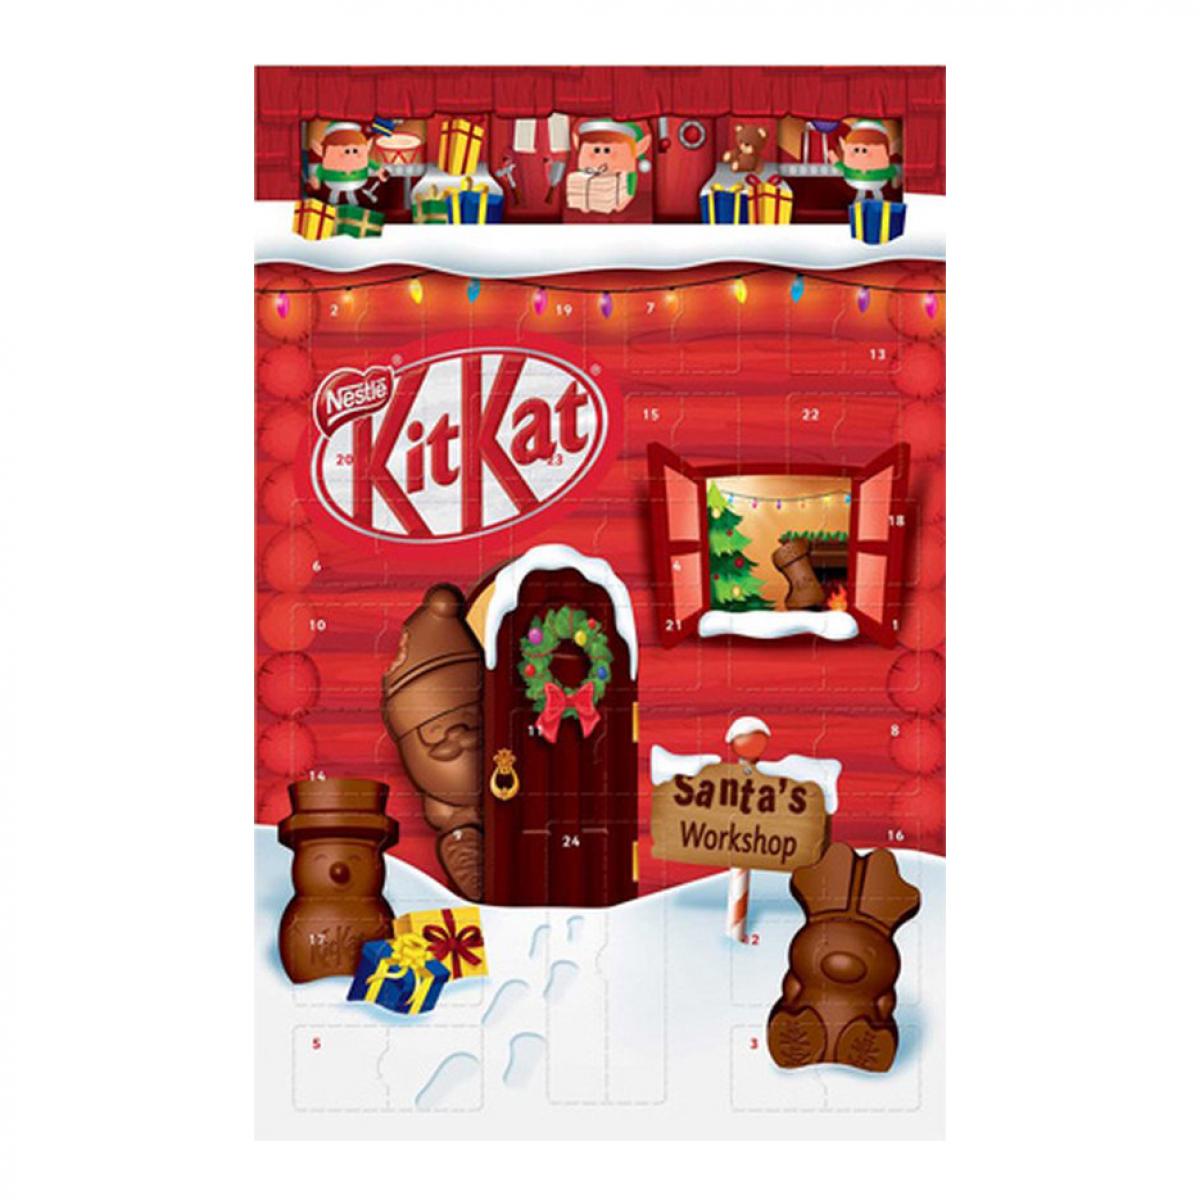 Adventskalender met KitKat-chocolade